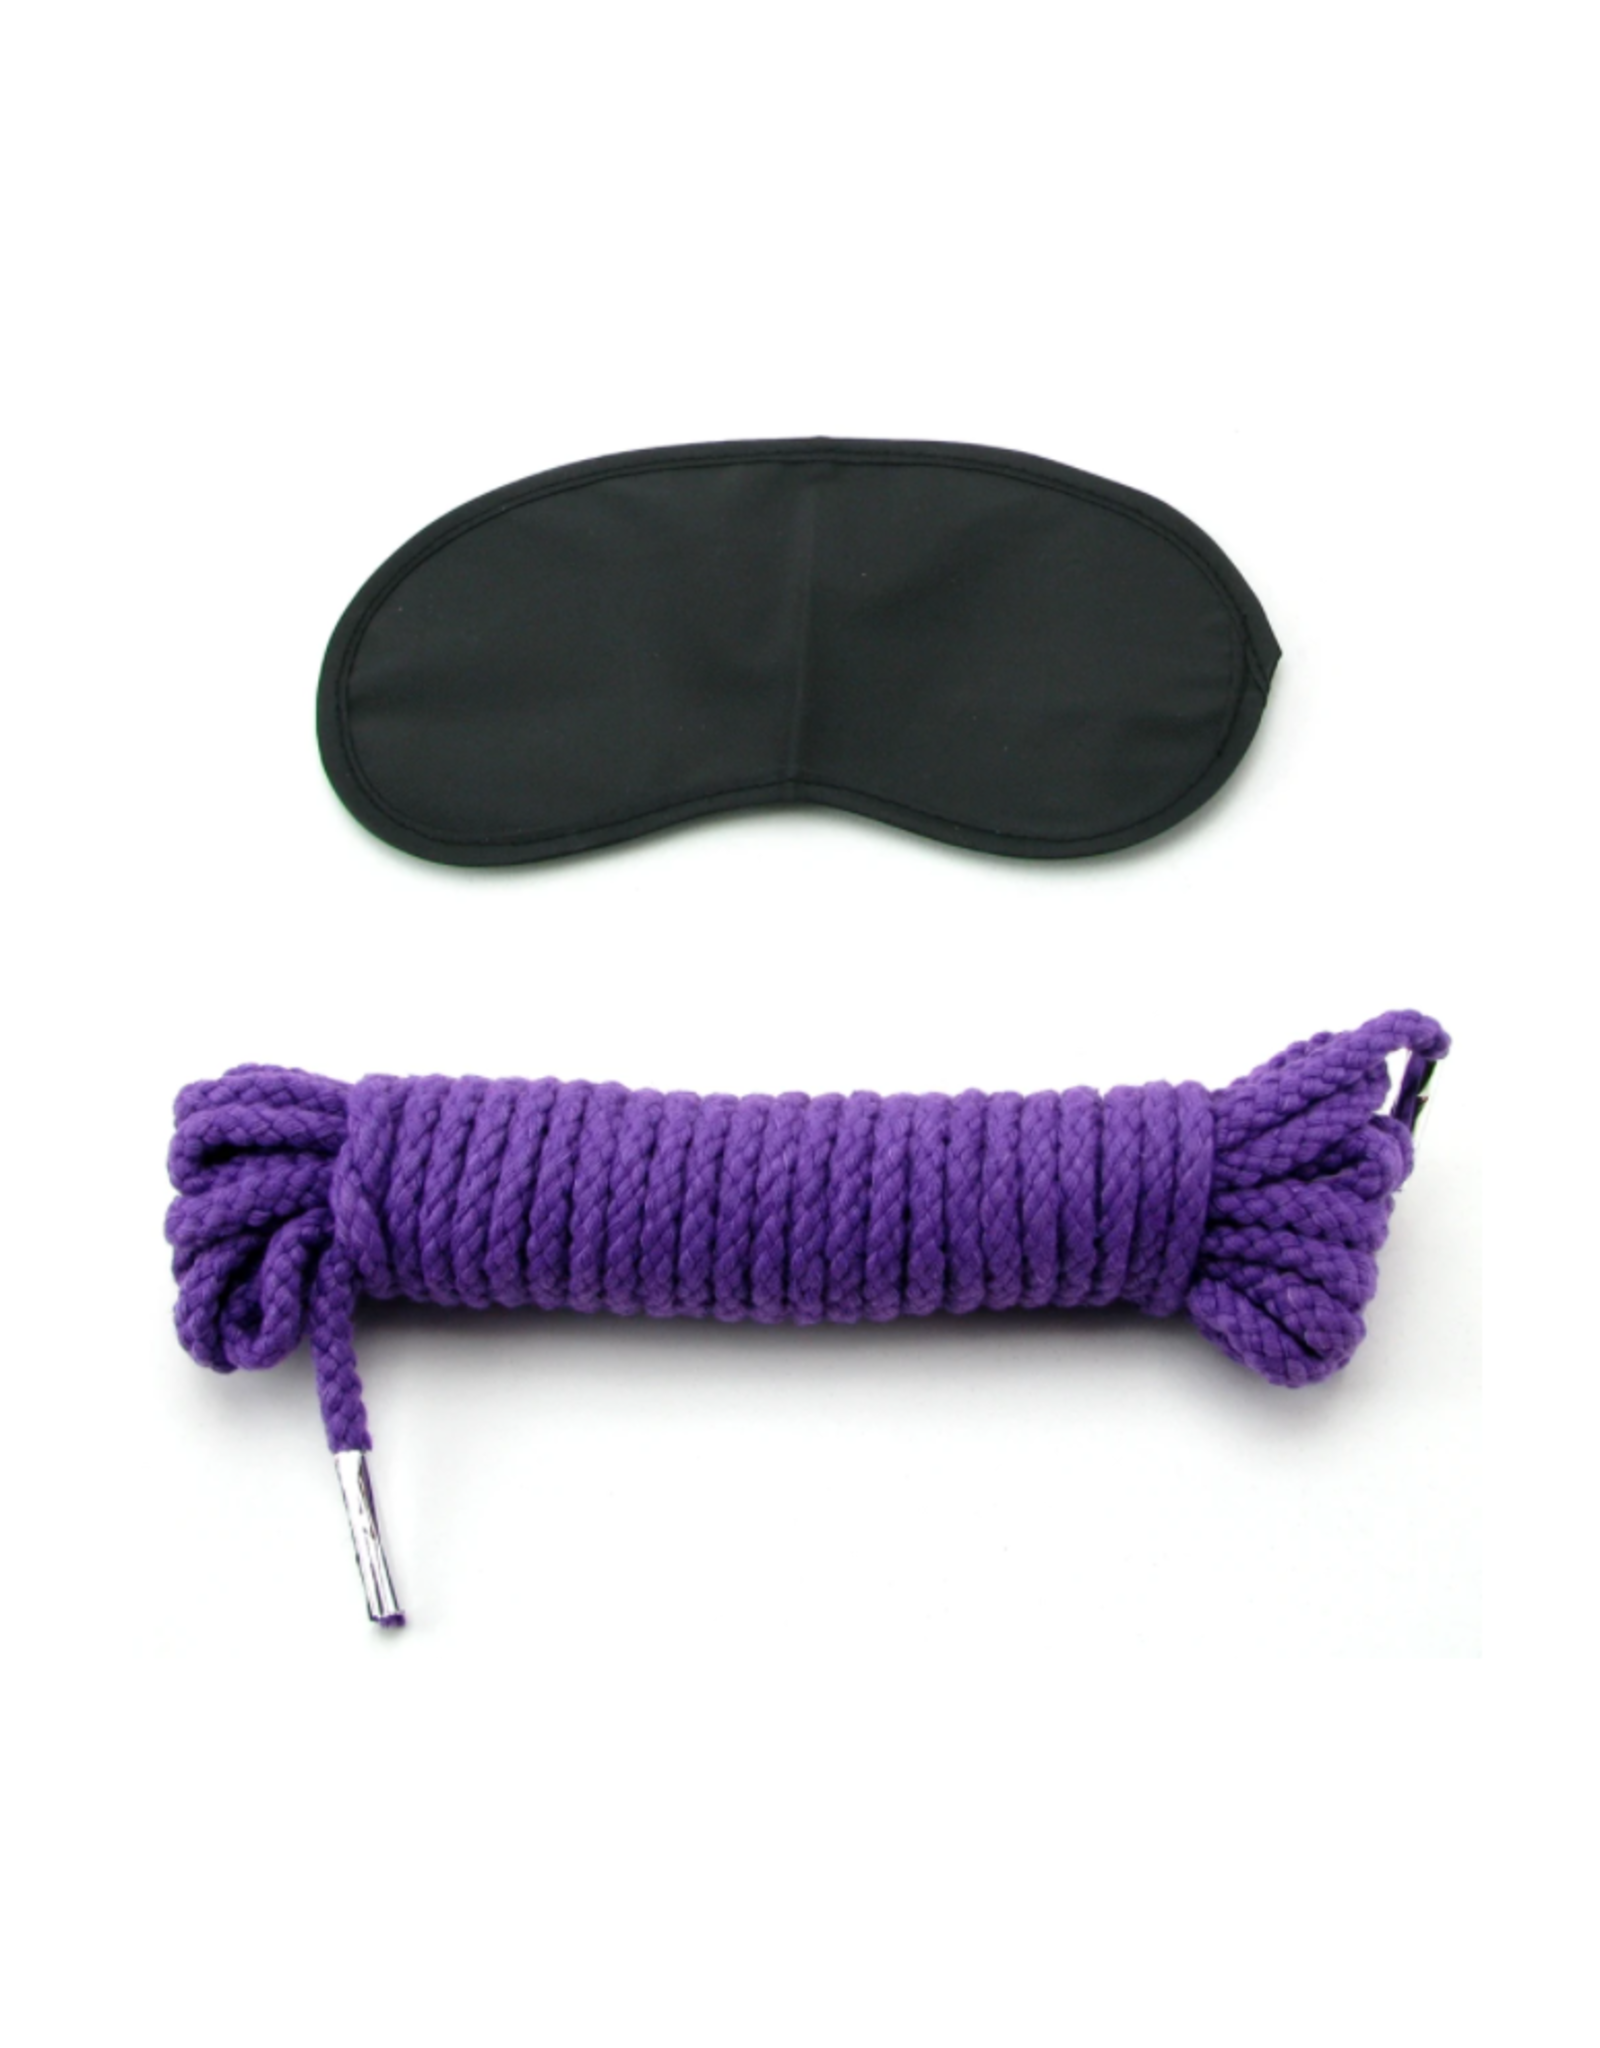 Pipedream Japanese Silk Rope - Purple